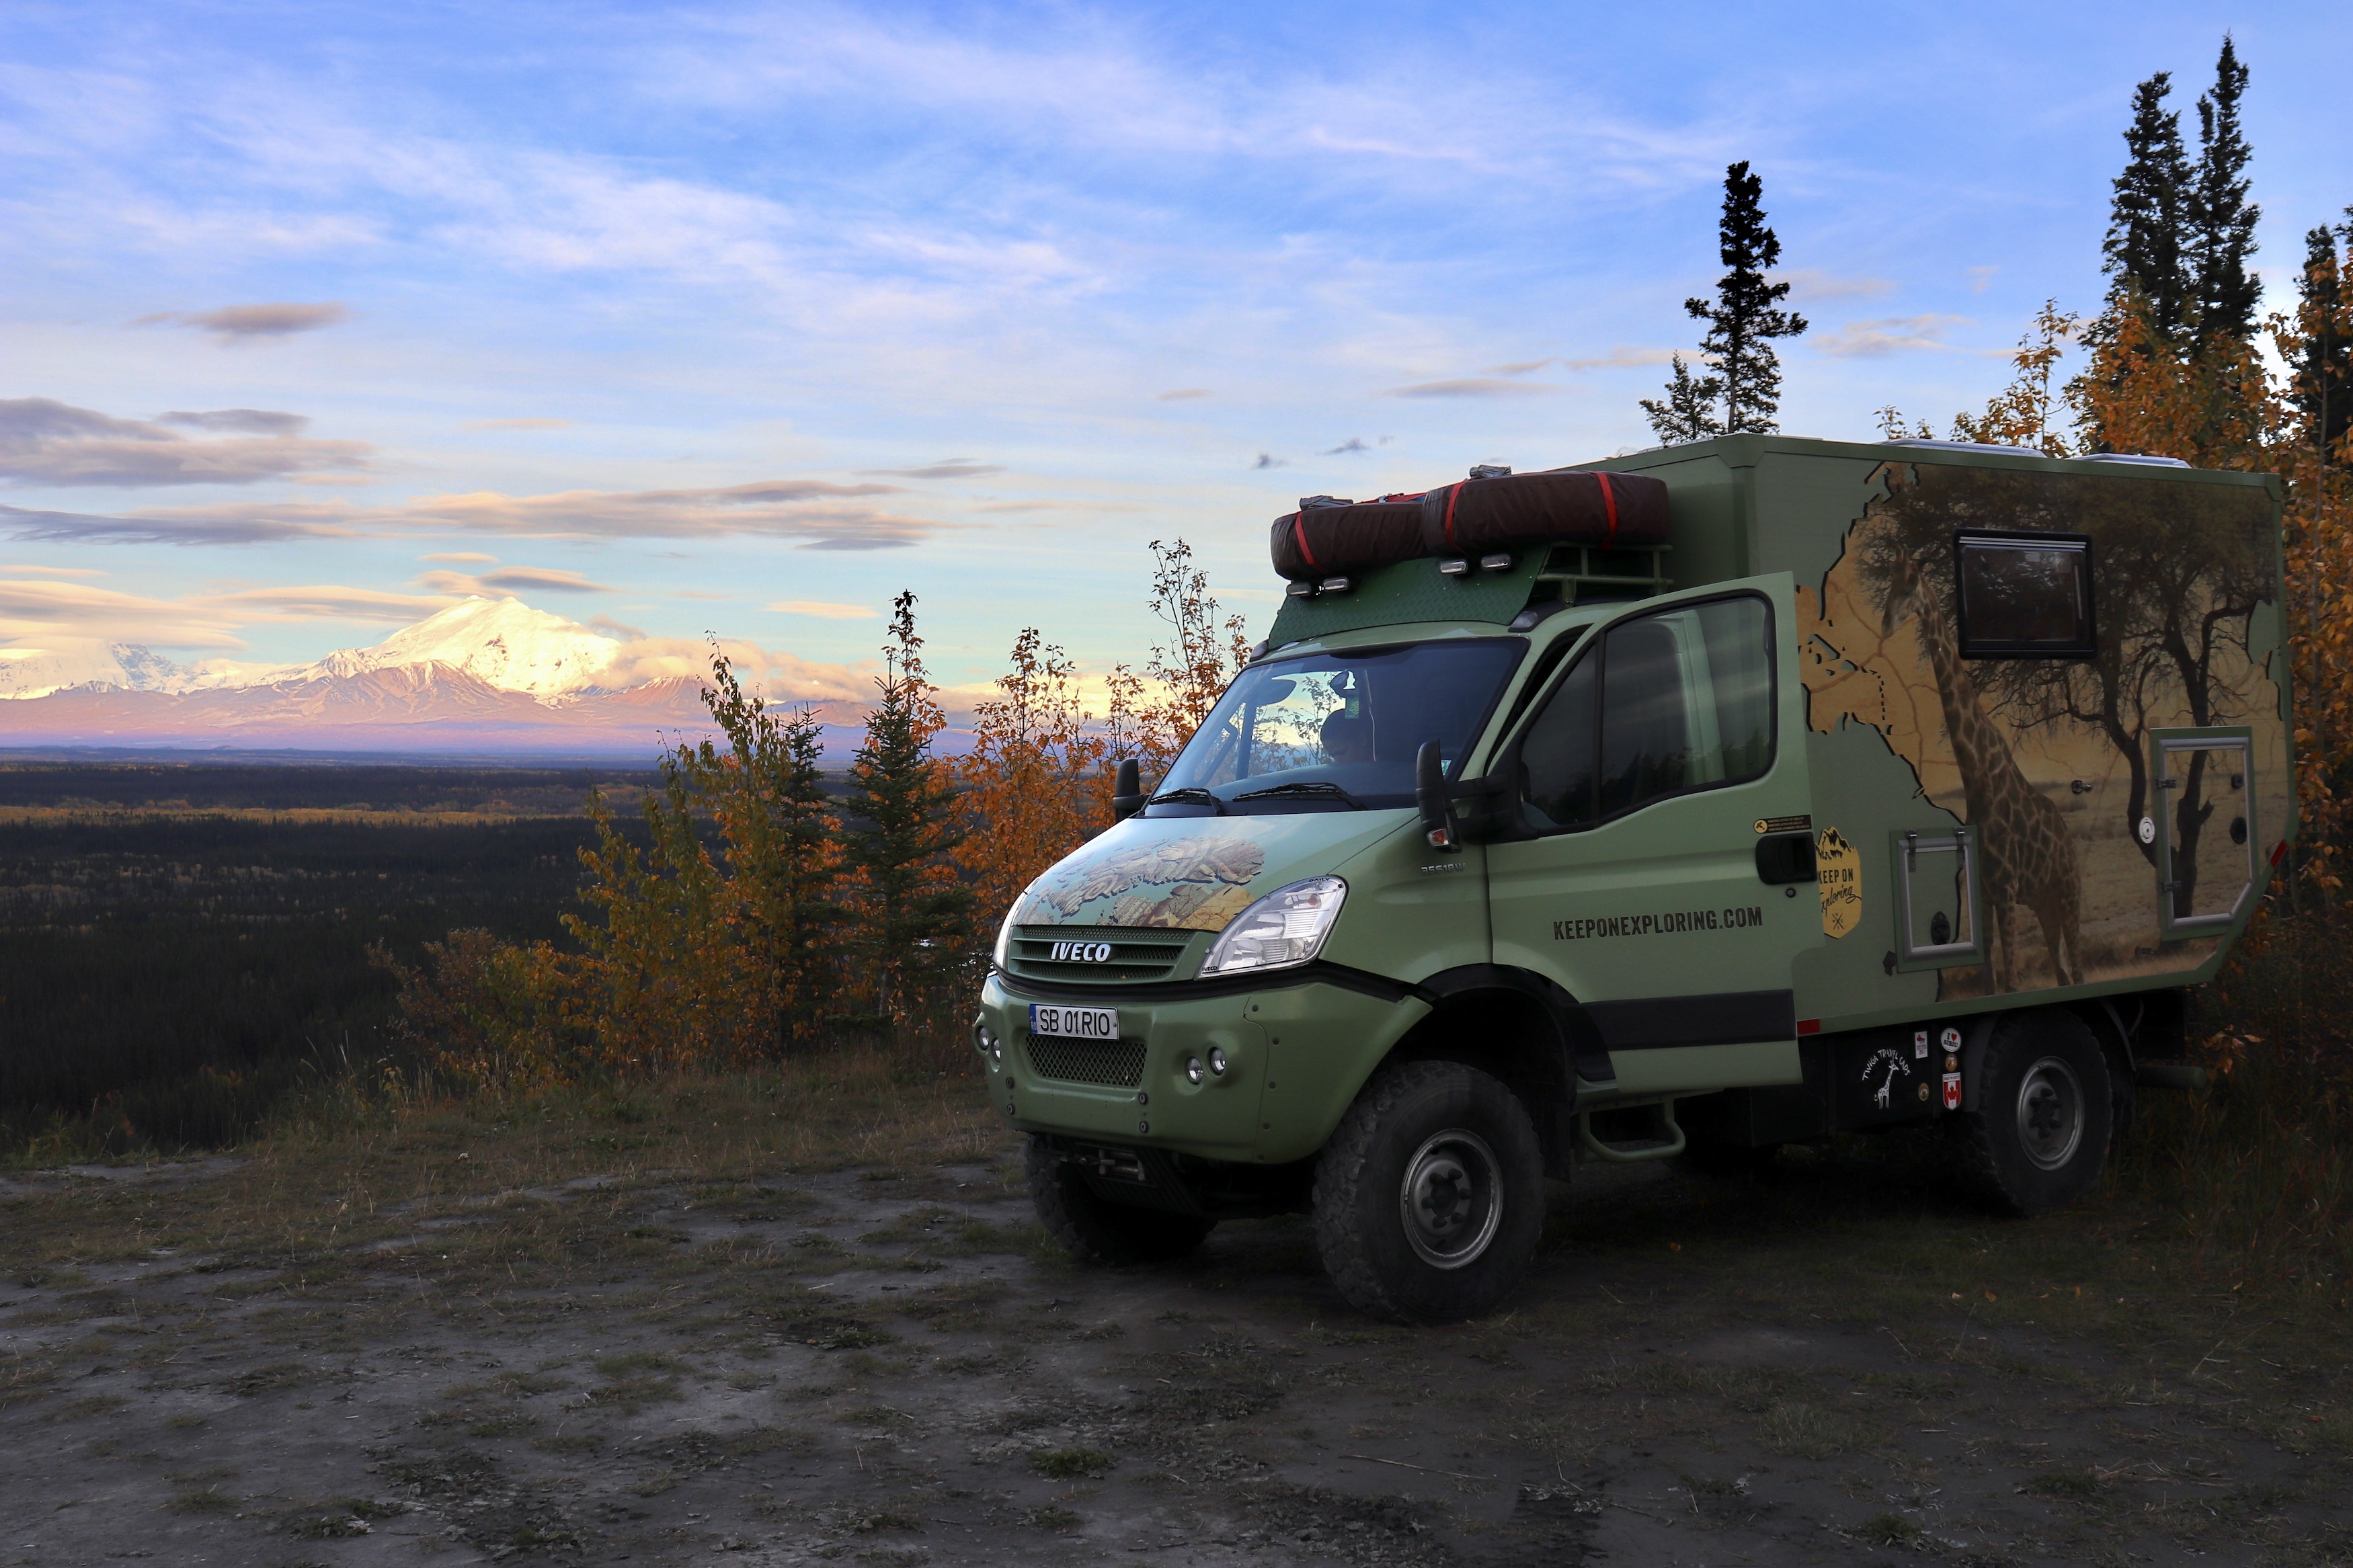 Camping view to Wrangell St. Elias National Park, Alaska